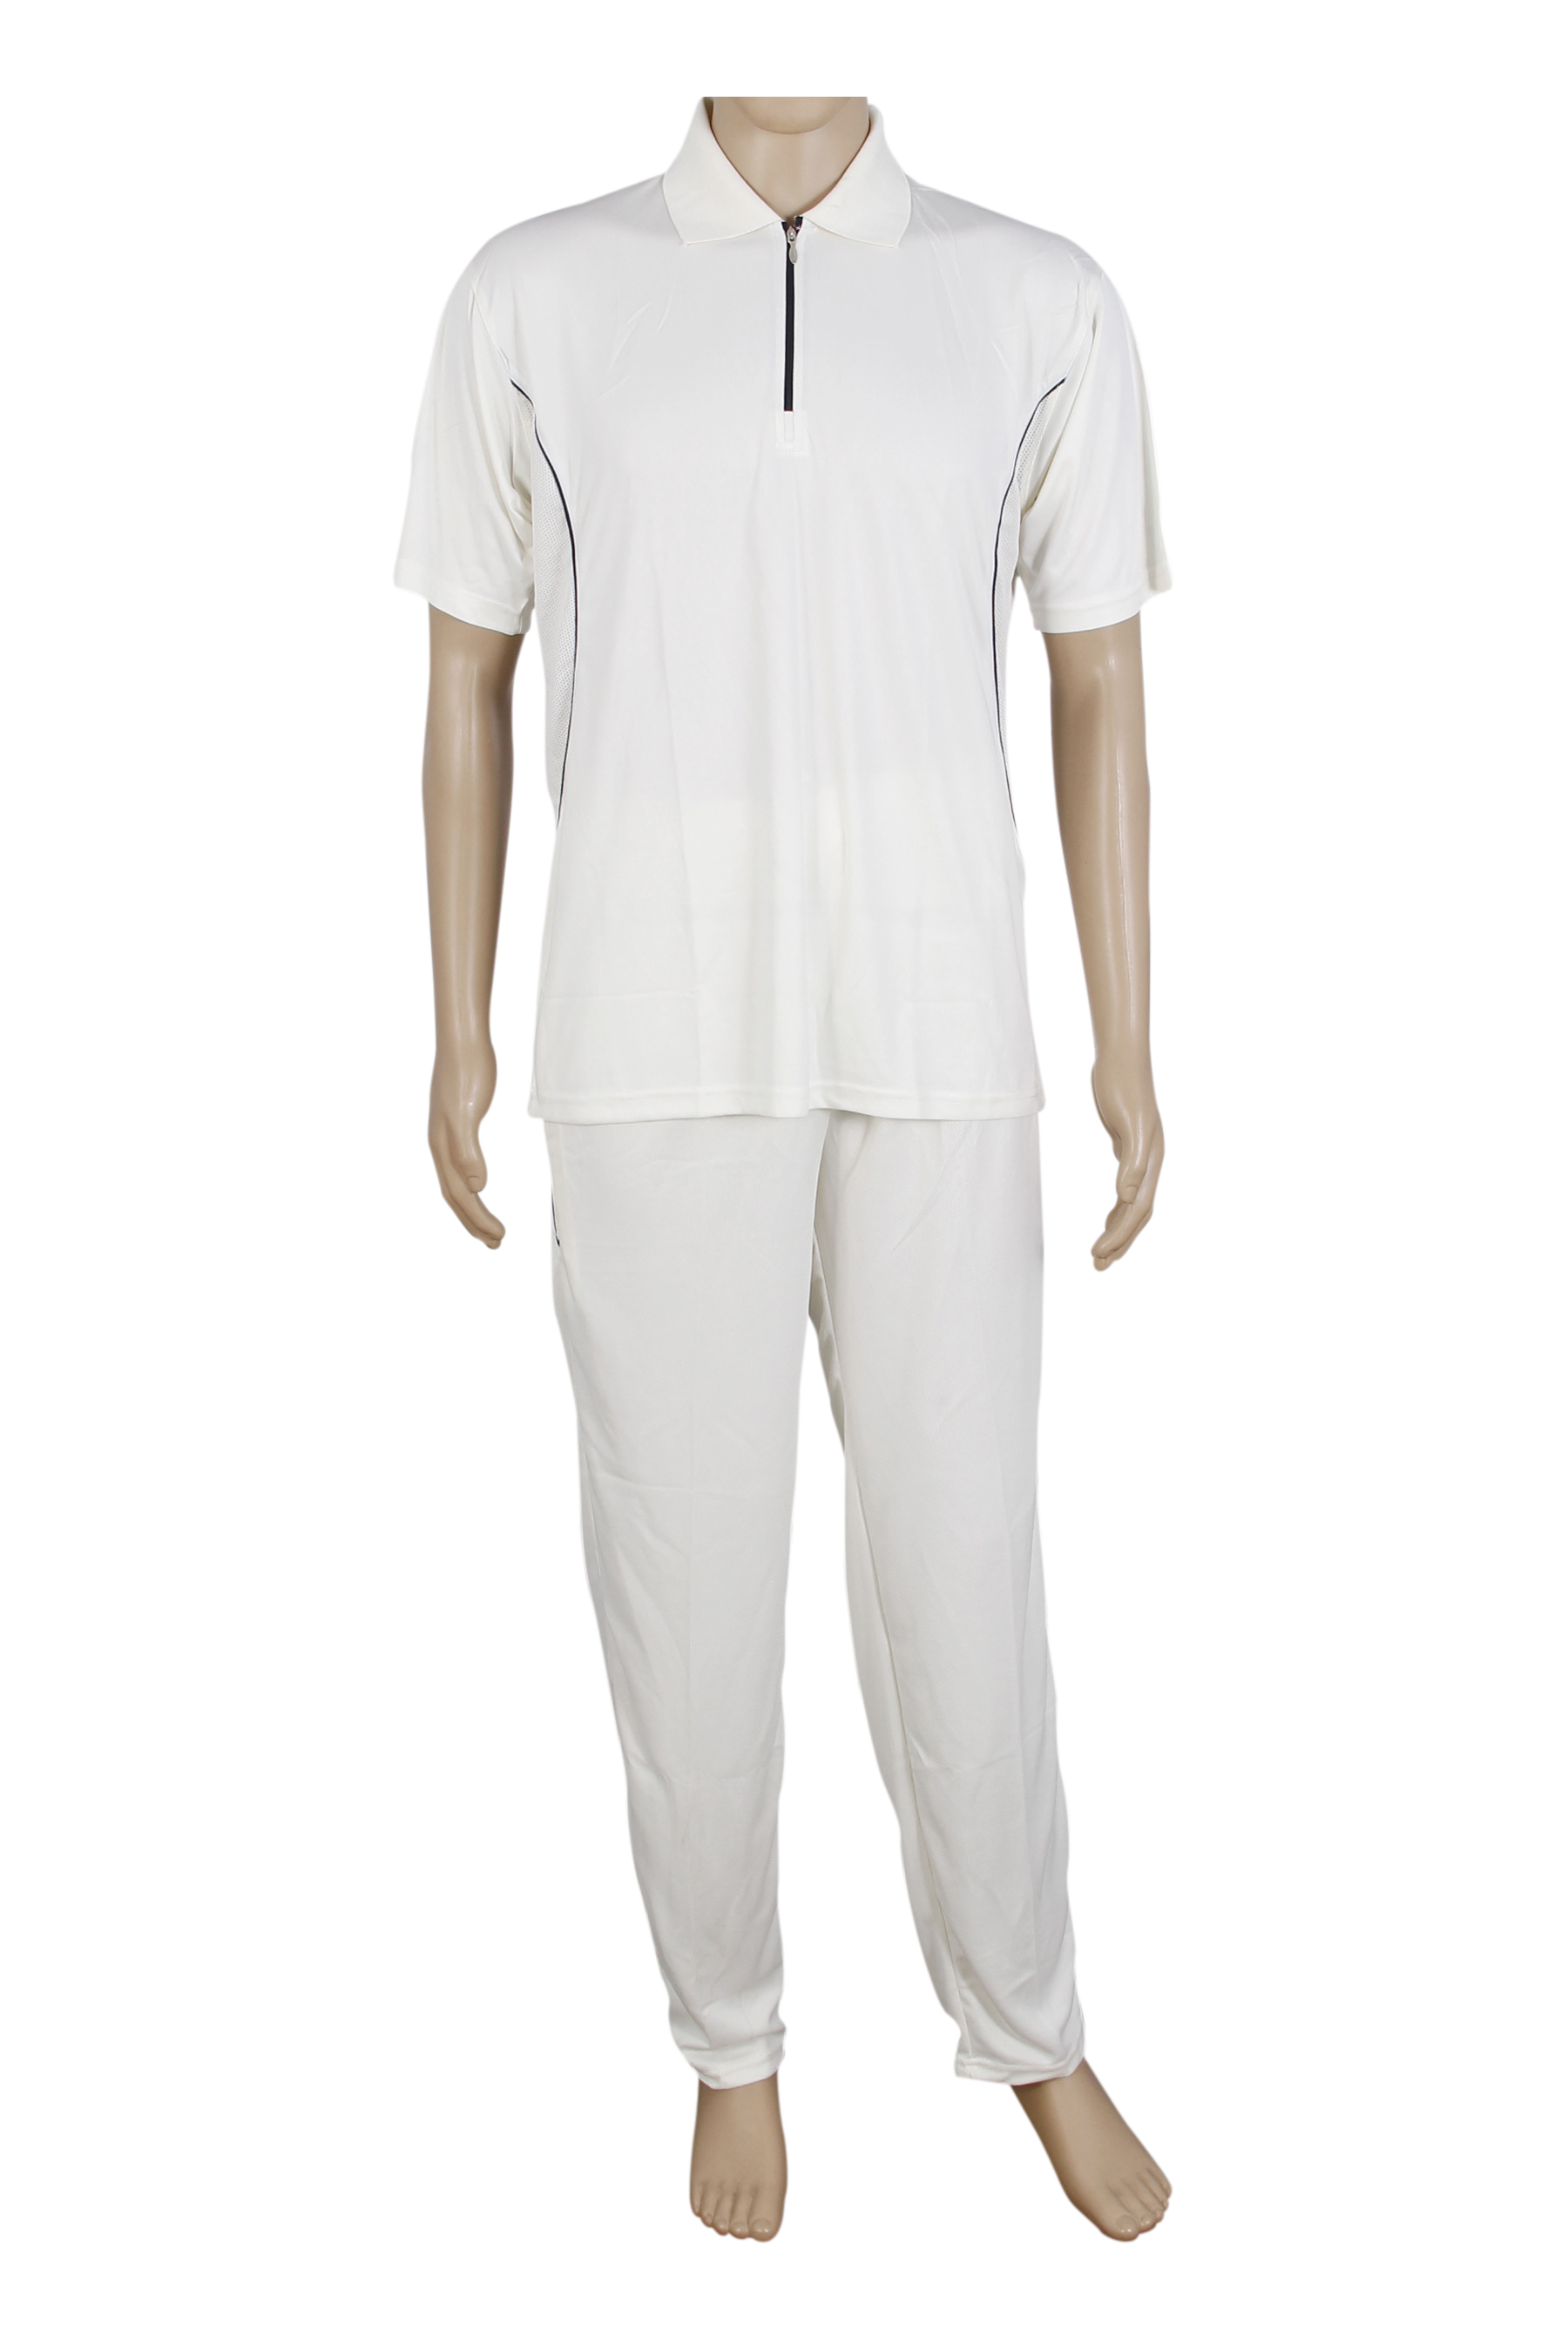 Buy RetailWorld Cream Colour Cricket Dress (Half Sleeves